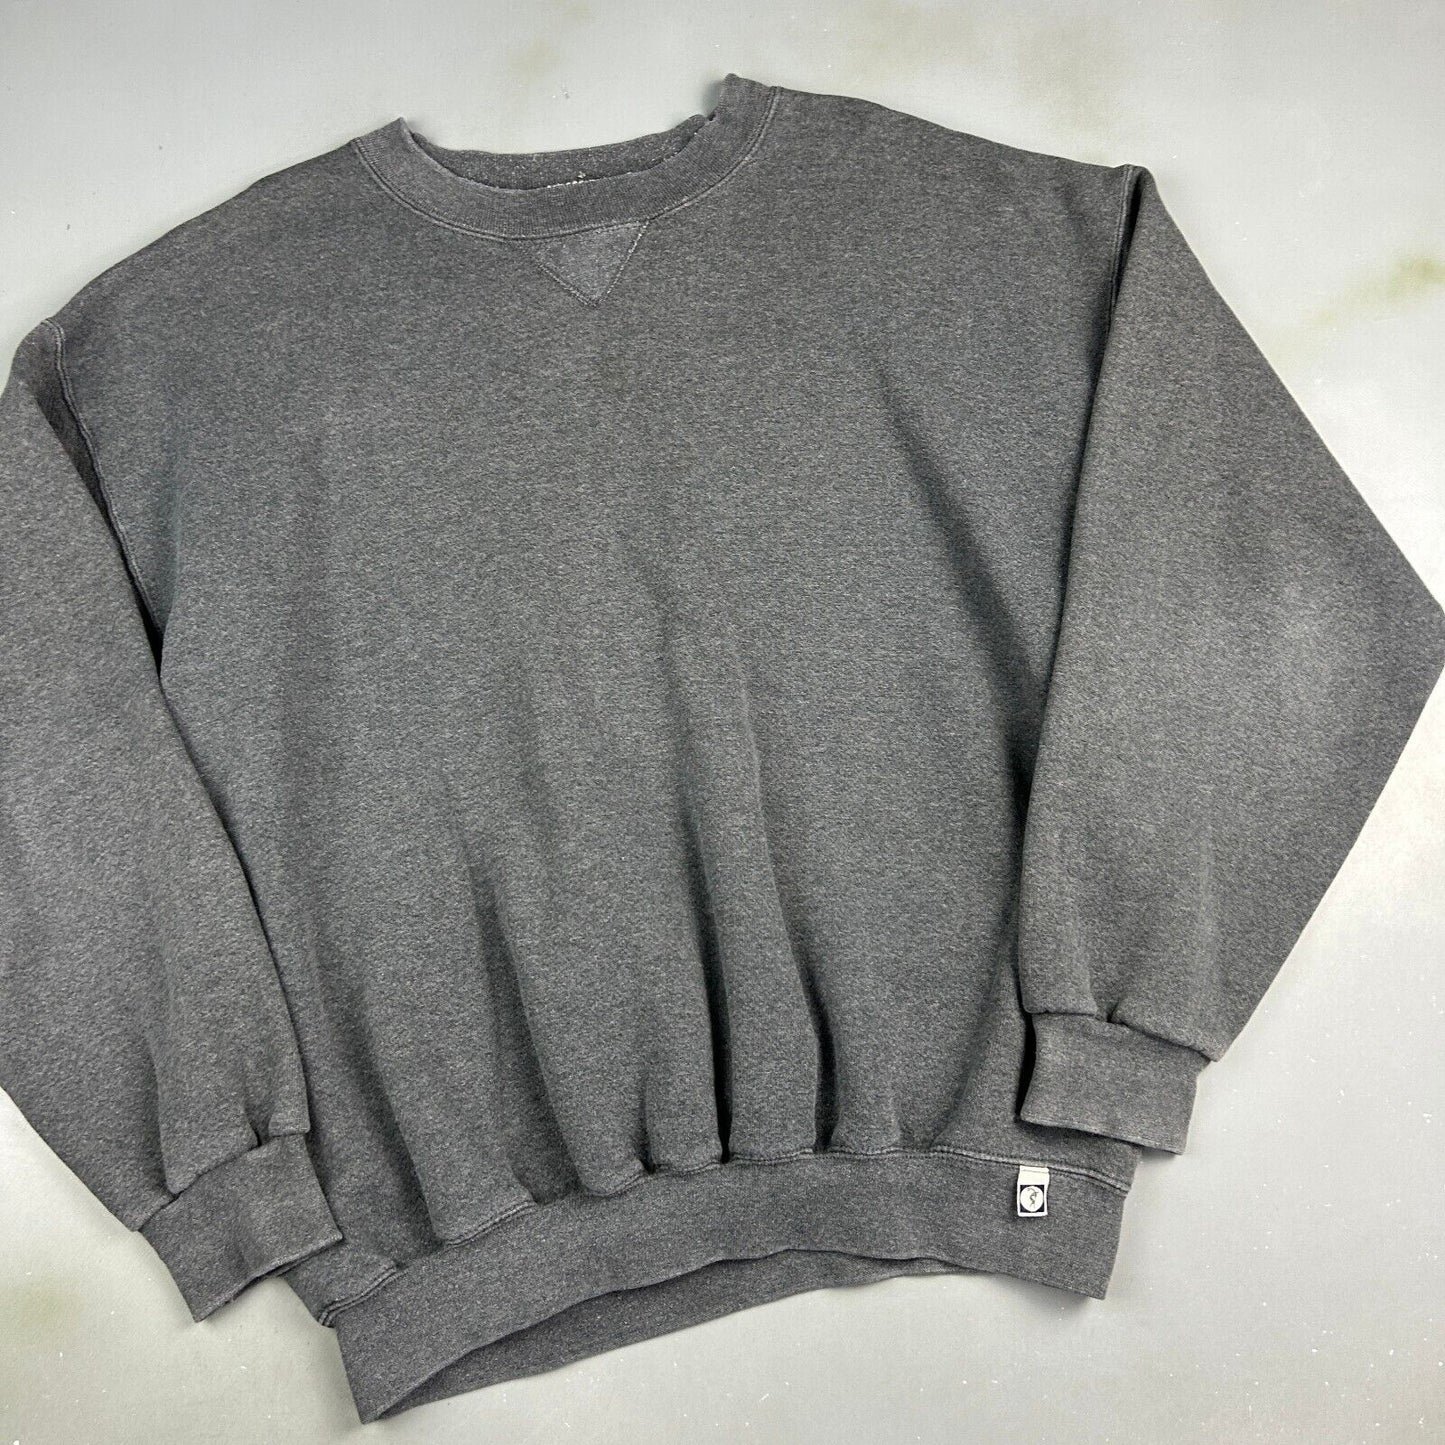 VINTAGE 90s Discus Athletic Faded Dark Grey Blank Crewneck Sweater sz XL Adult